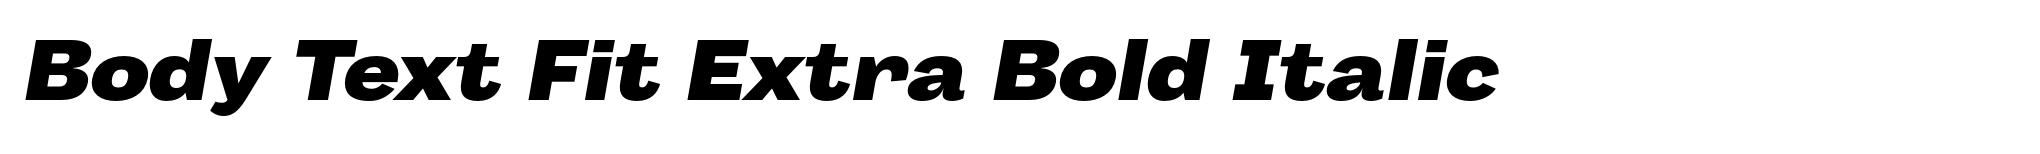 Body Text Fit Extra Bold Italic image